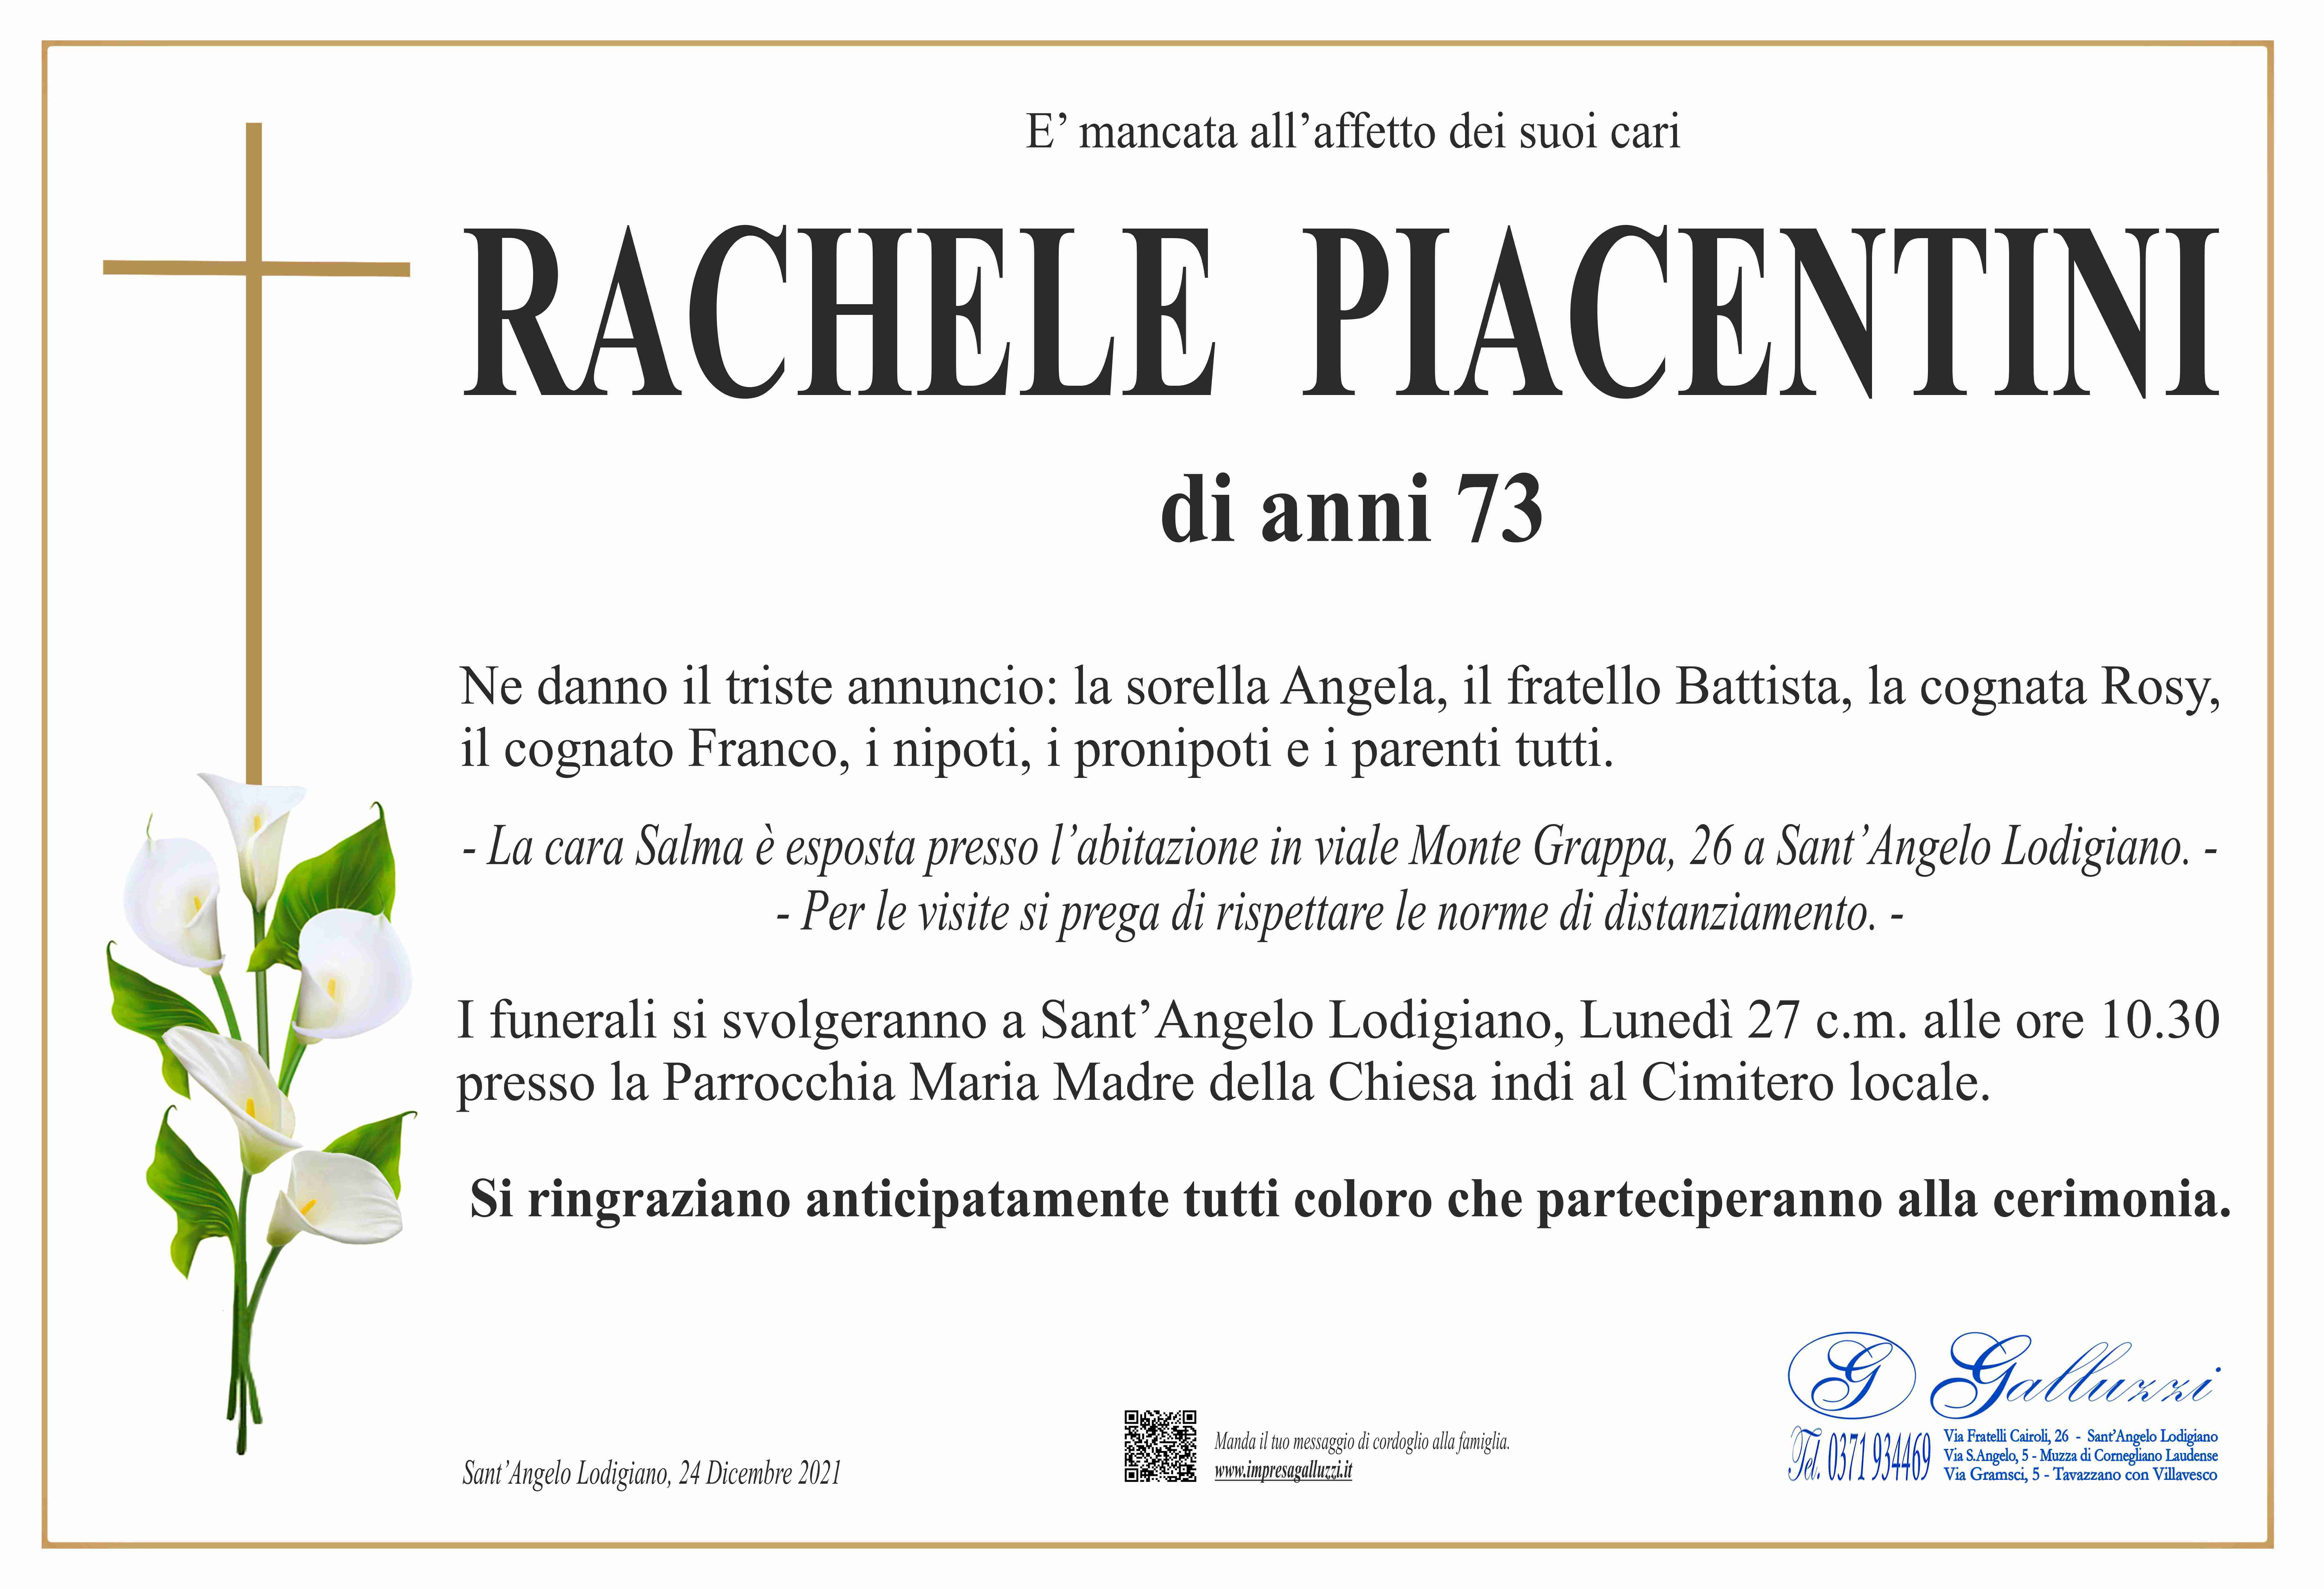 Rachele Piacentini